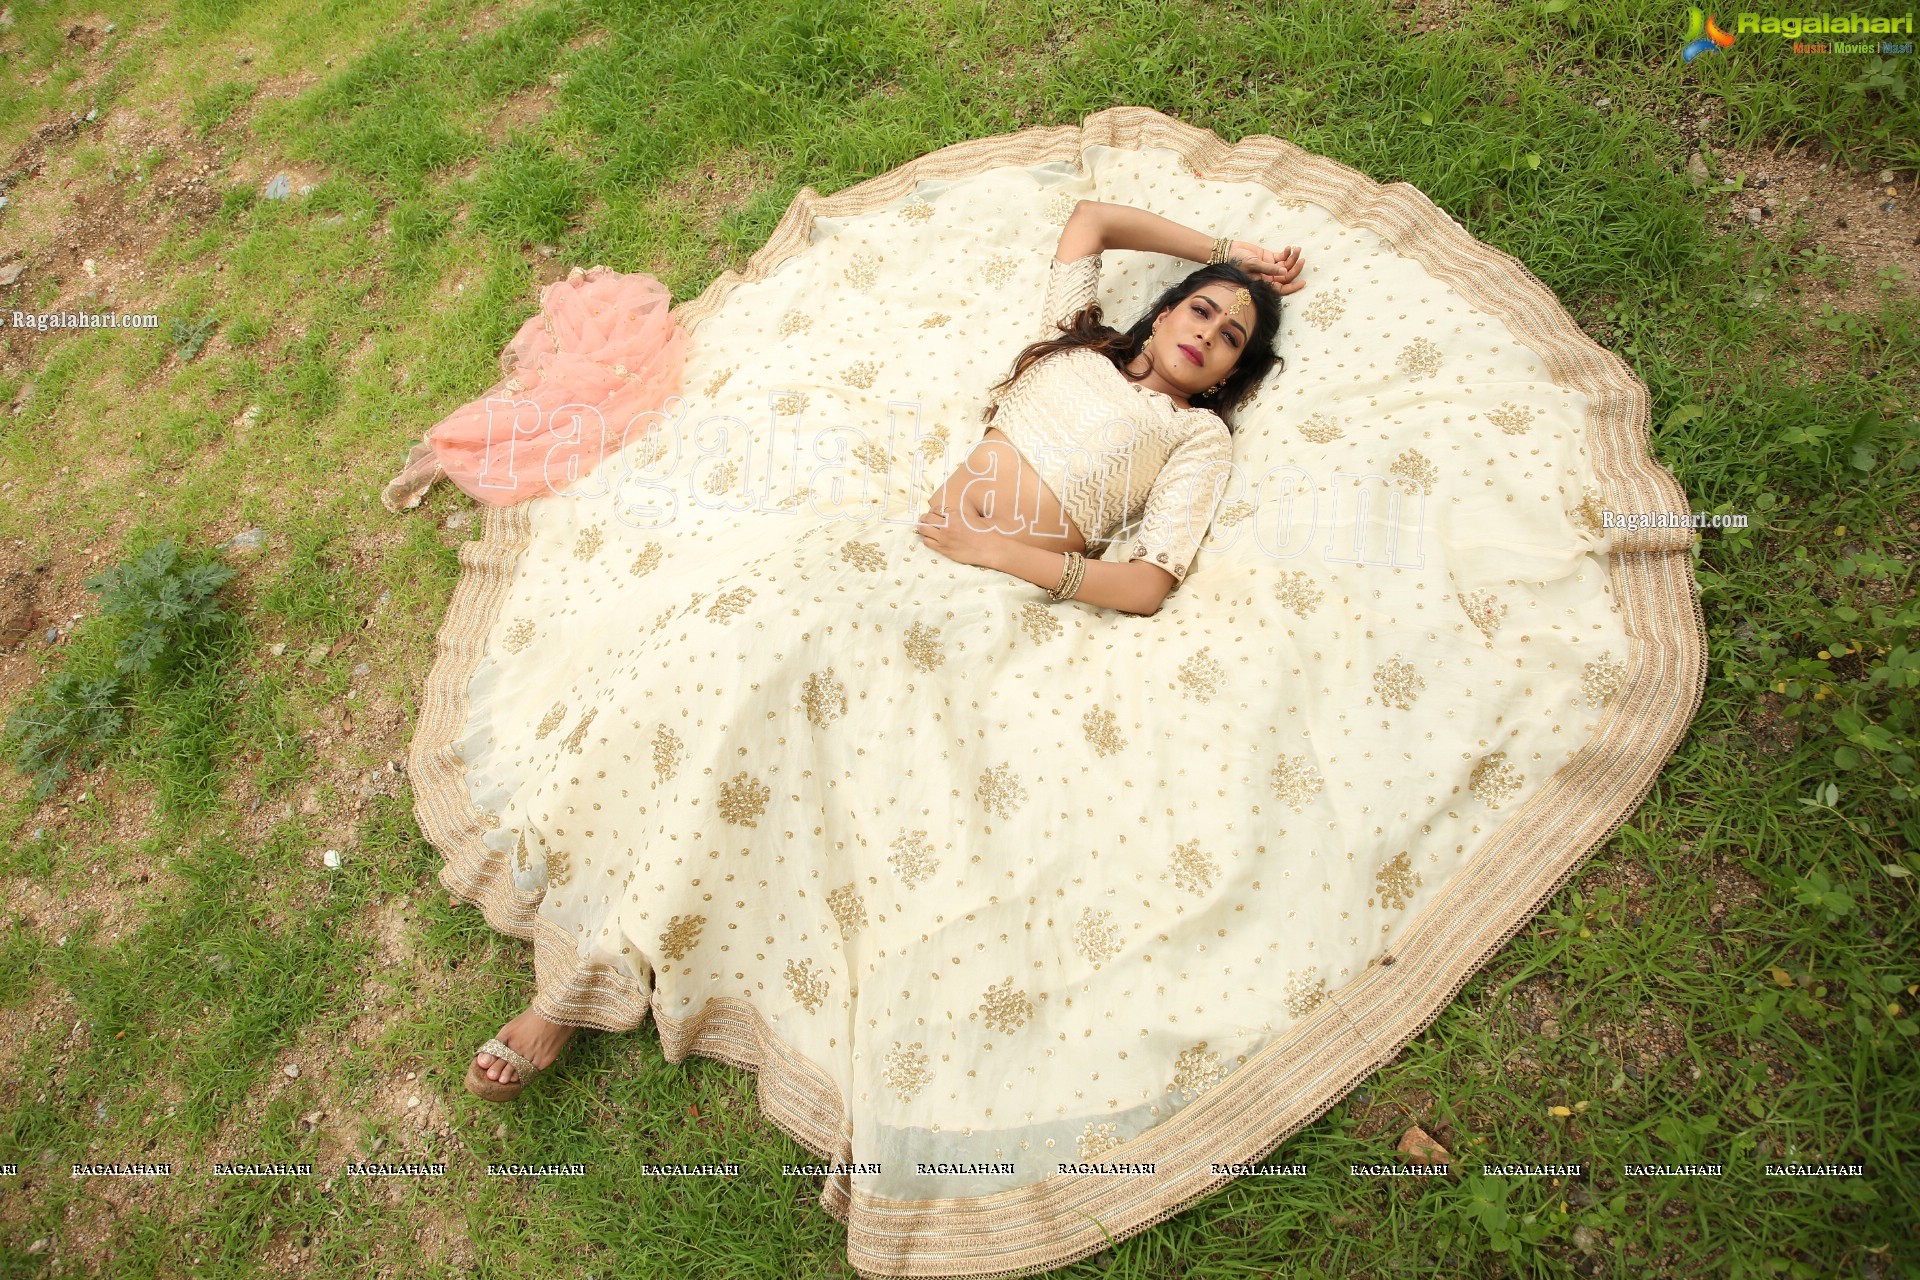 Sanjana Anne in Off White Lehenga Choli Exclusive Photo Shoot